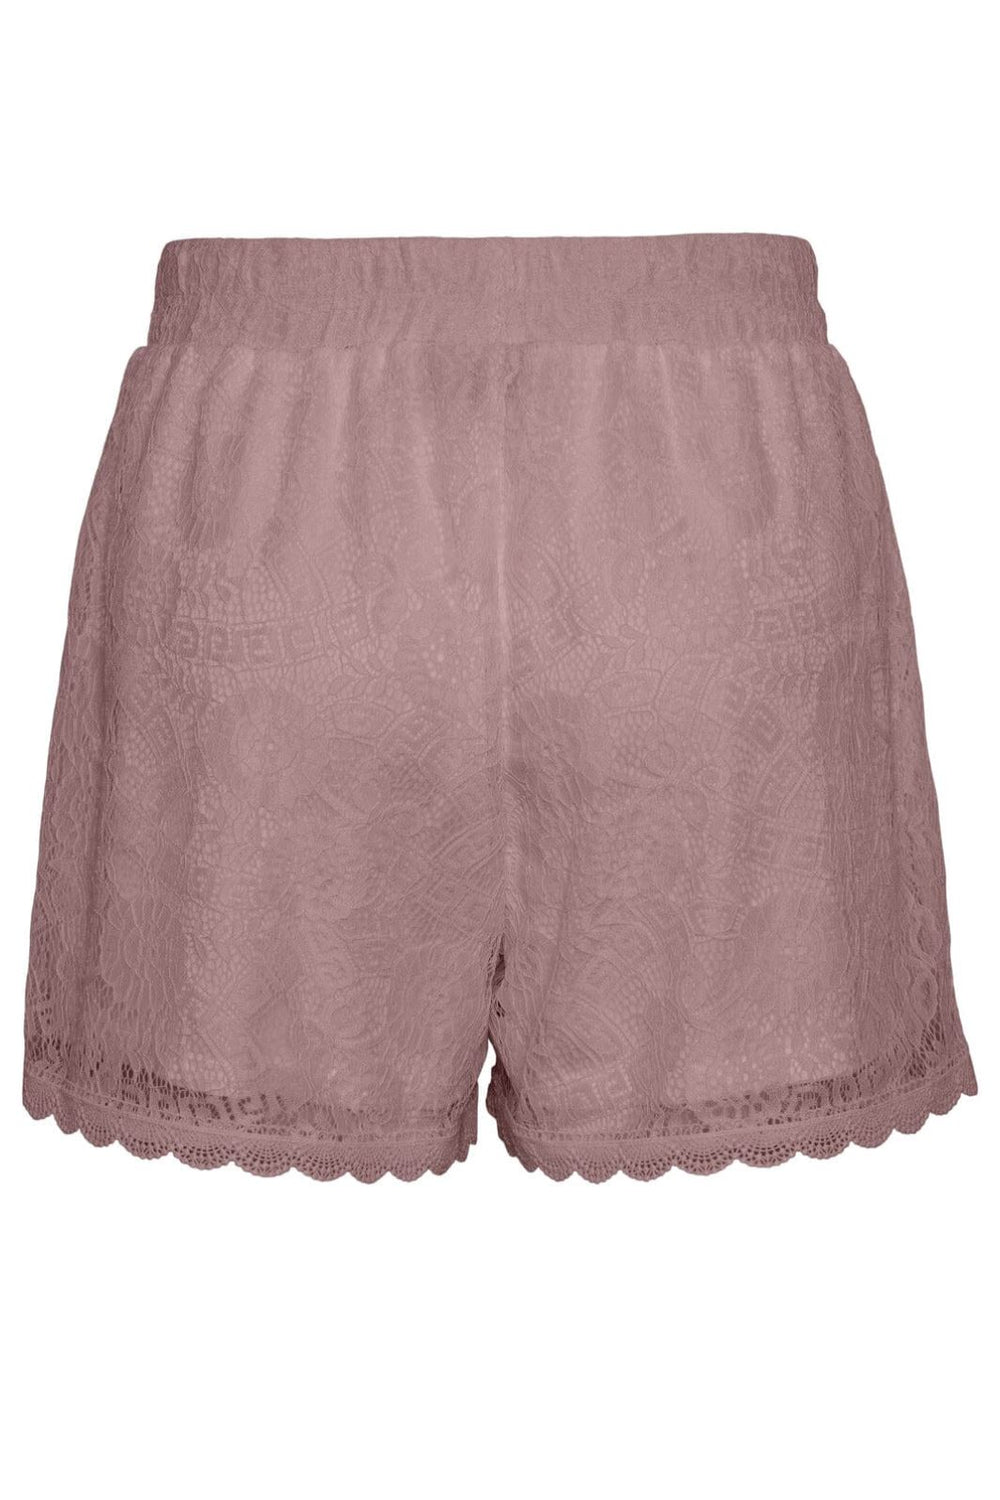 Pieces - Pcolline Shorts - 4474964 Woodrose Shorts 